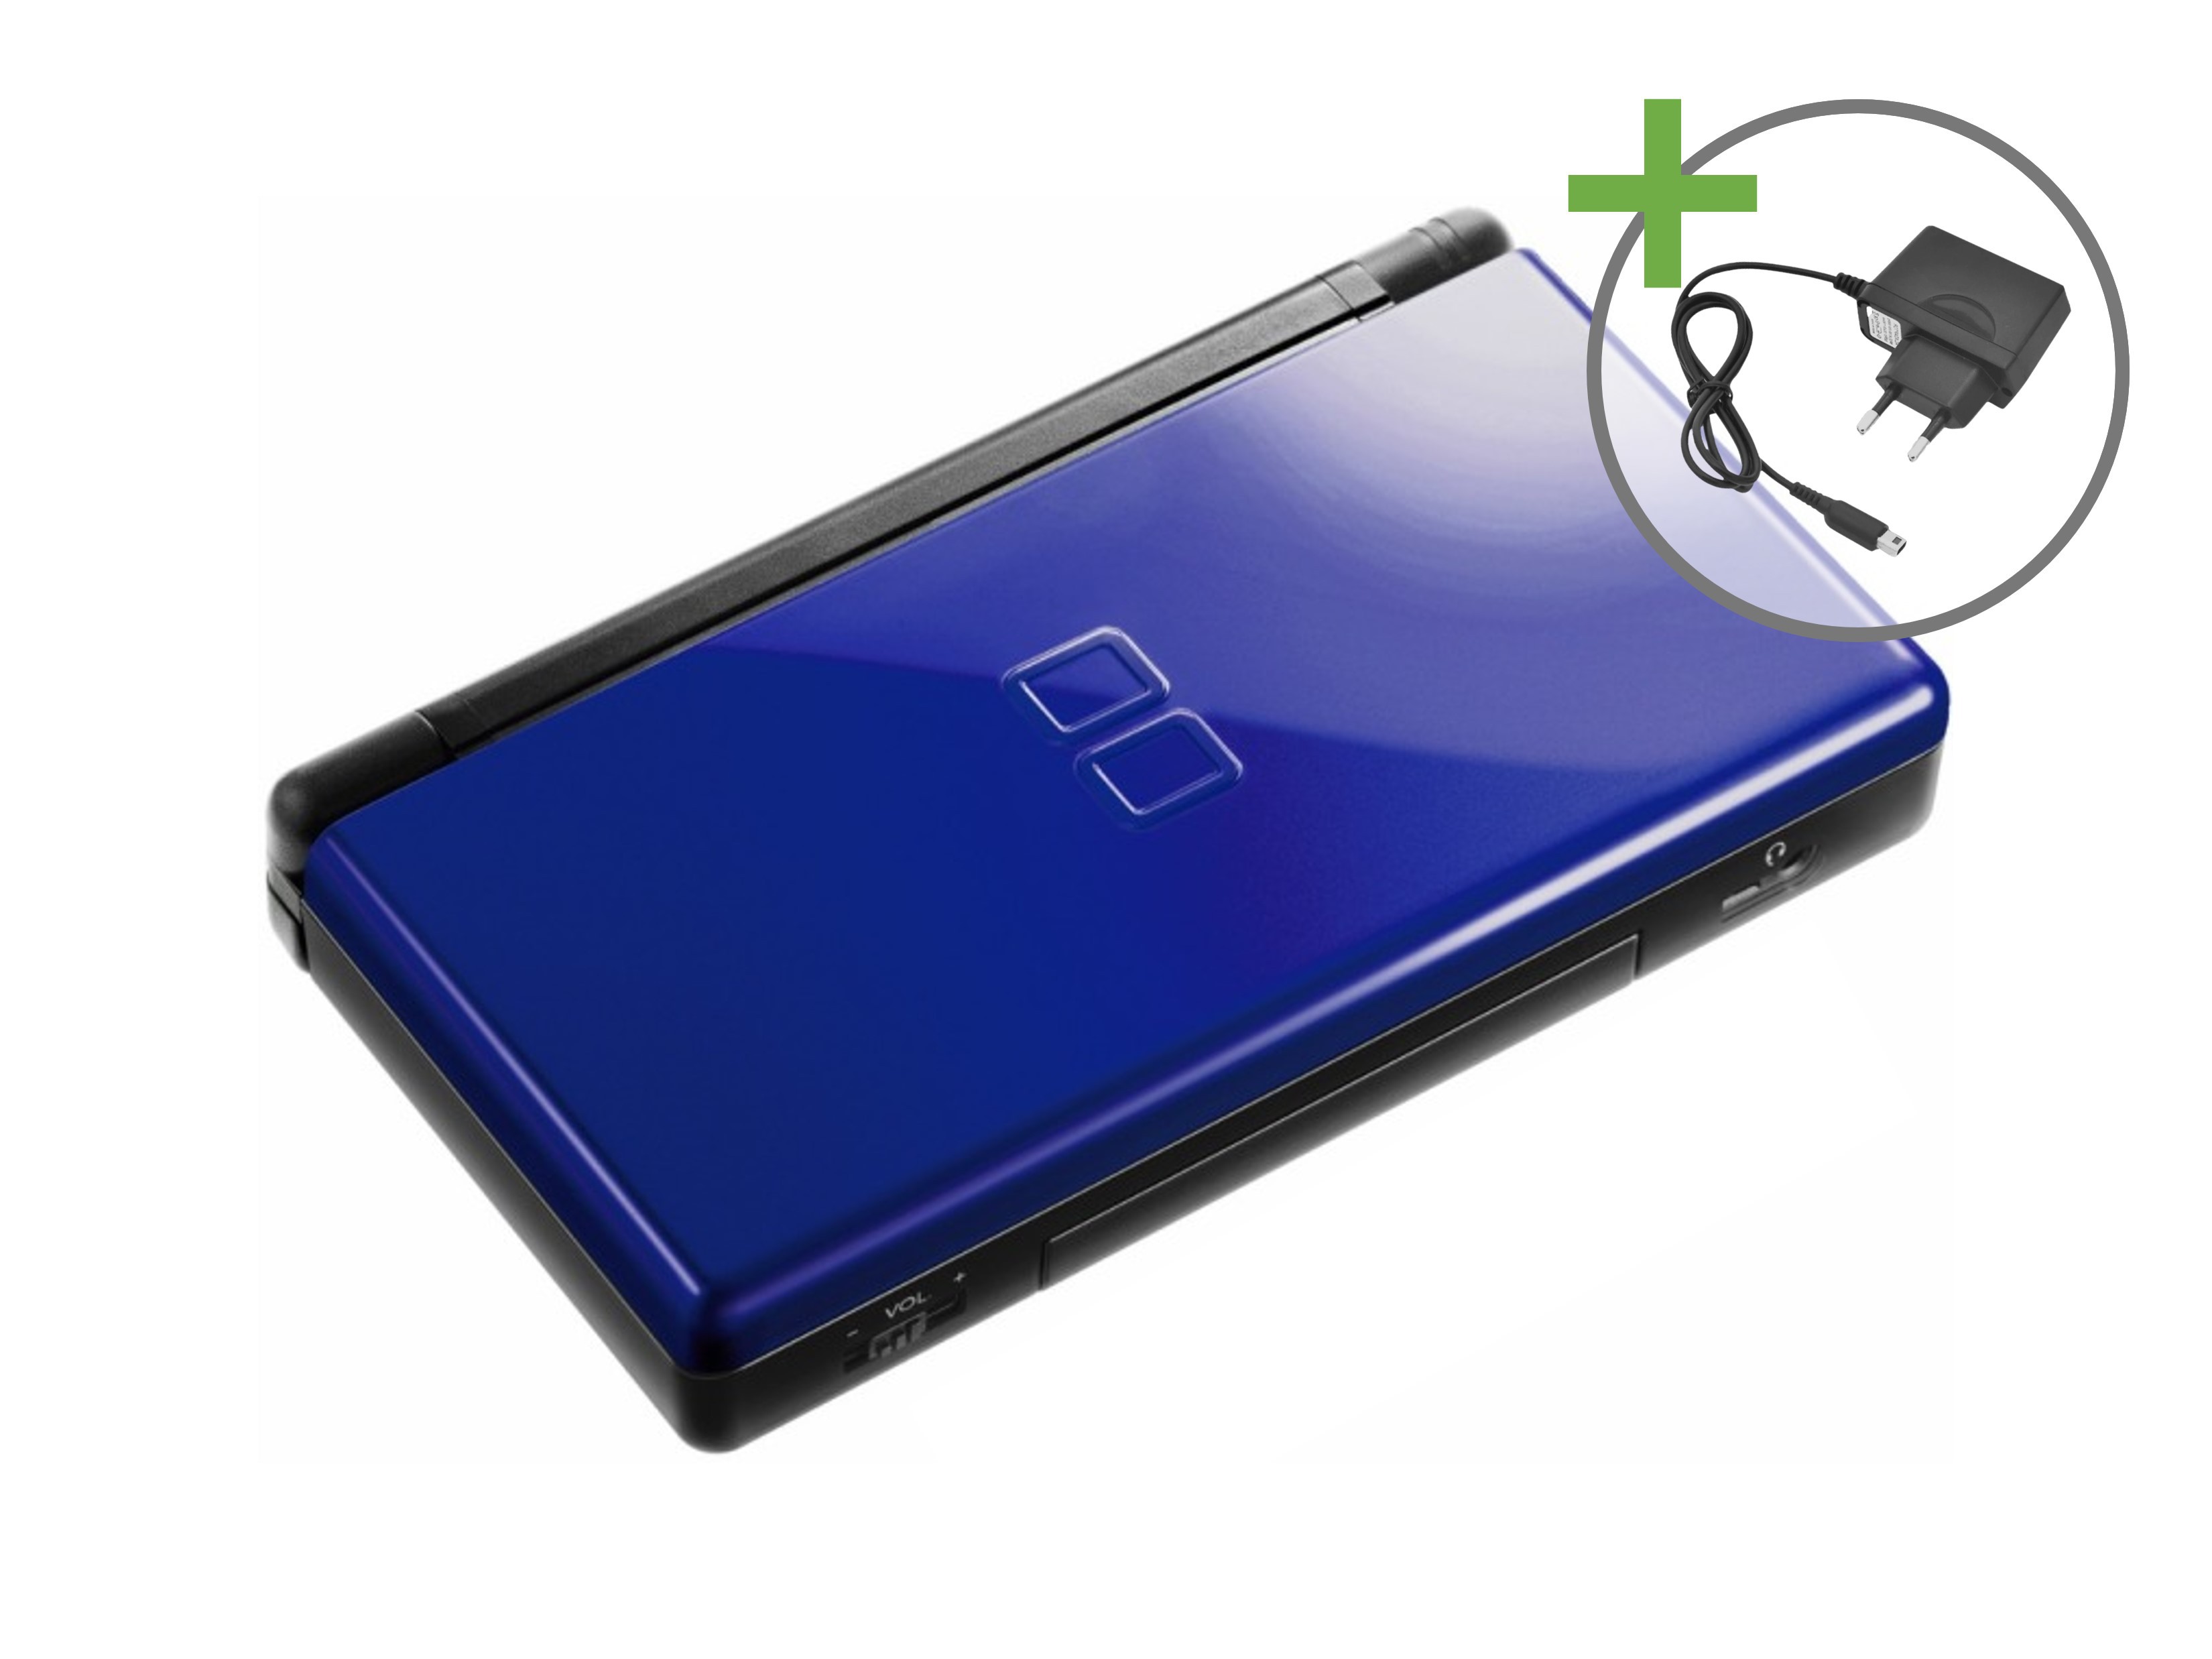 Nintendo DS Lite - Black/Blue - Nintendo DS Hardware - 2